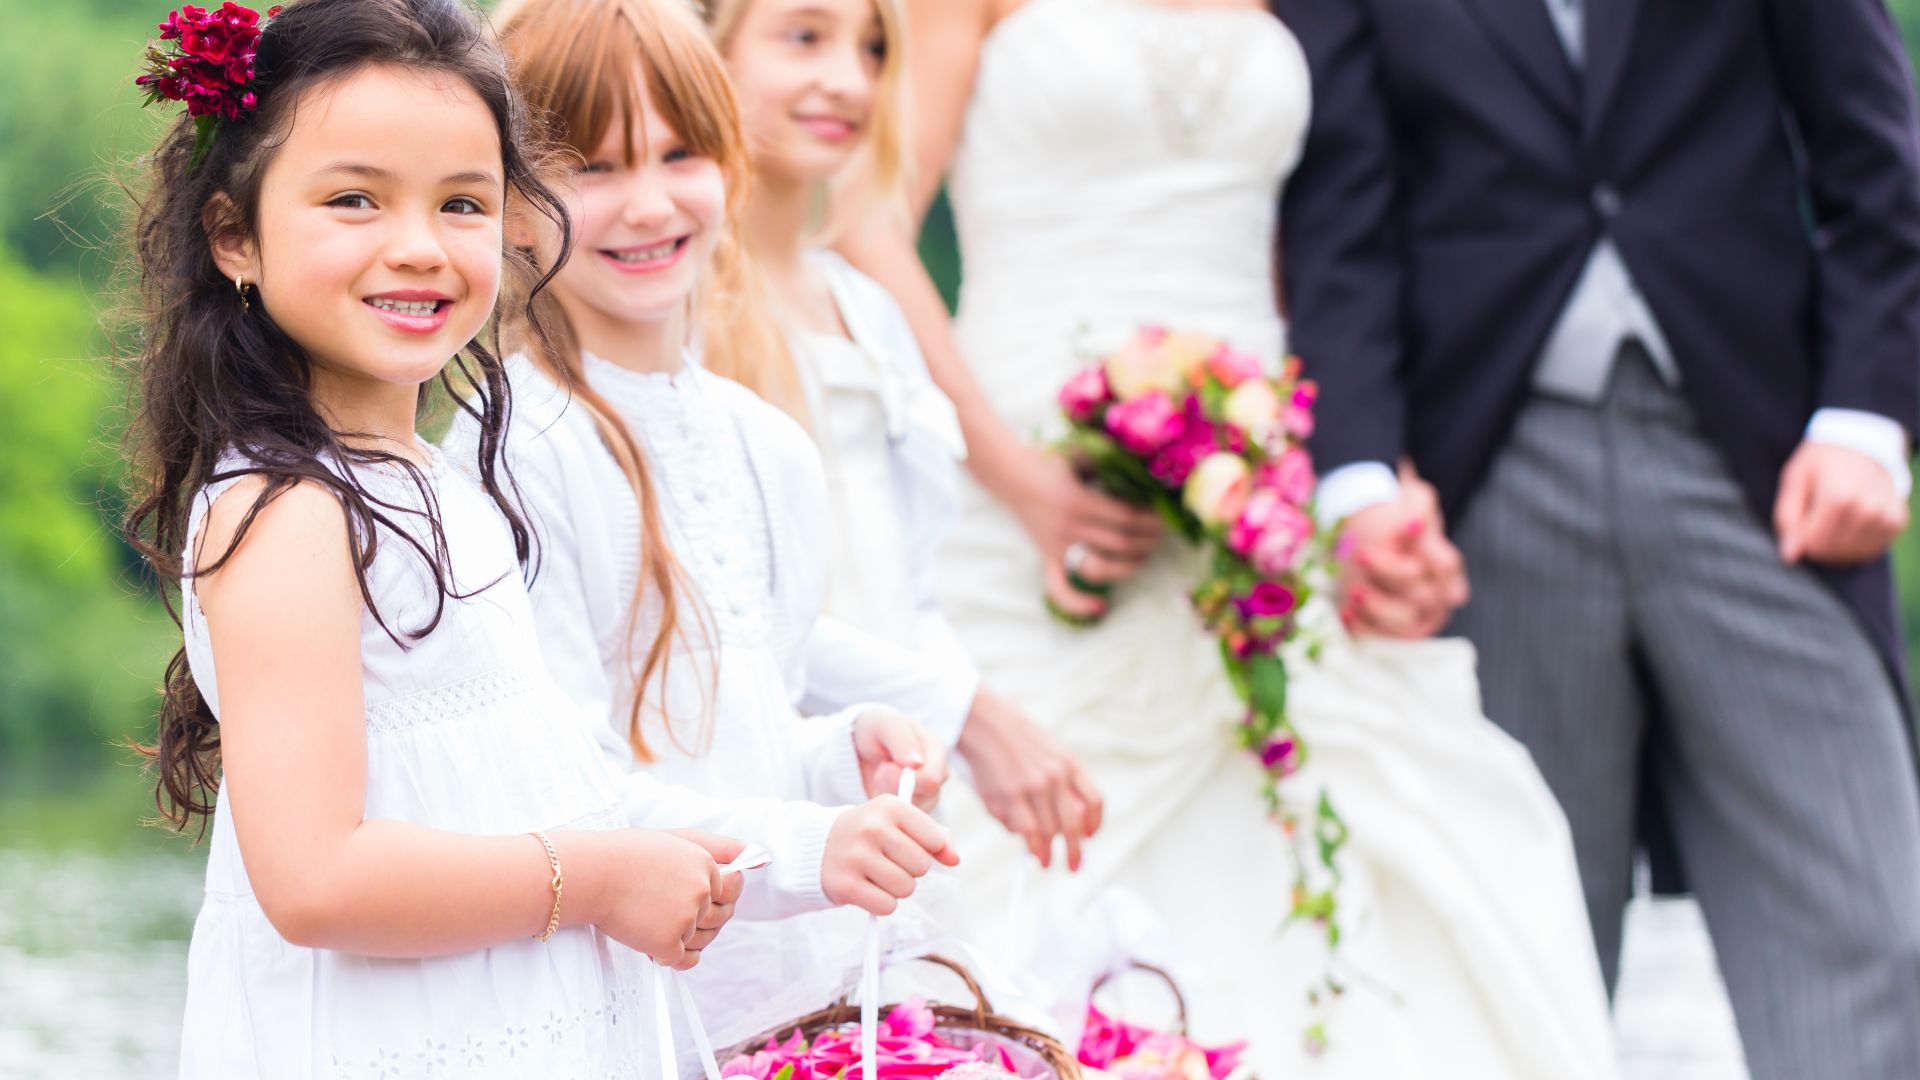 Wedding Website FAQ - Are Children invited?